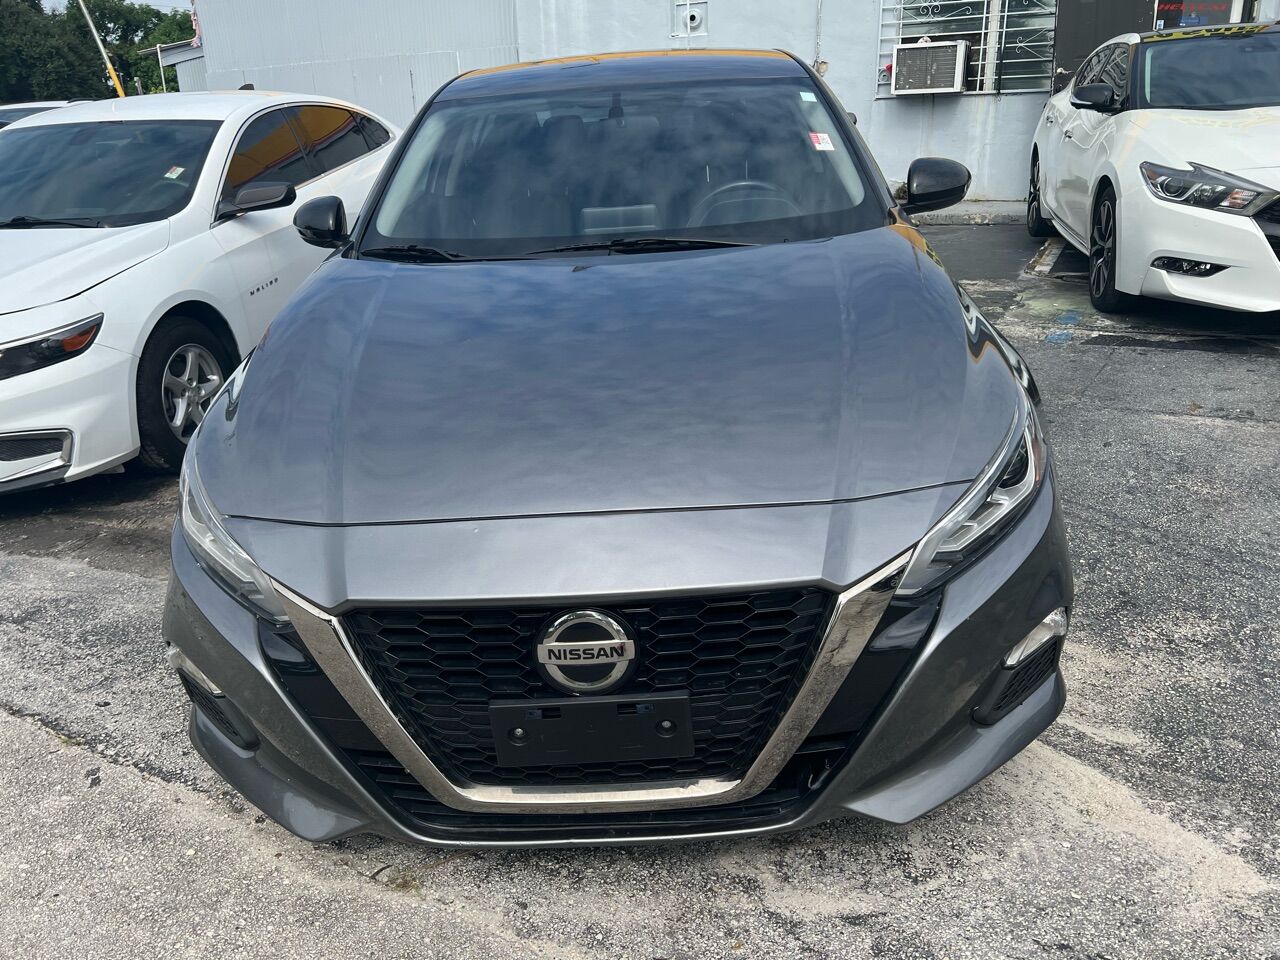 2019 Nissan Altima Sedan - $18,800